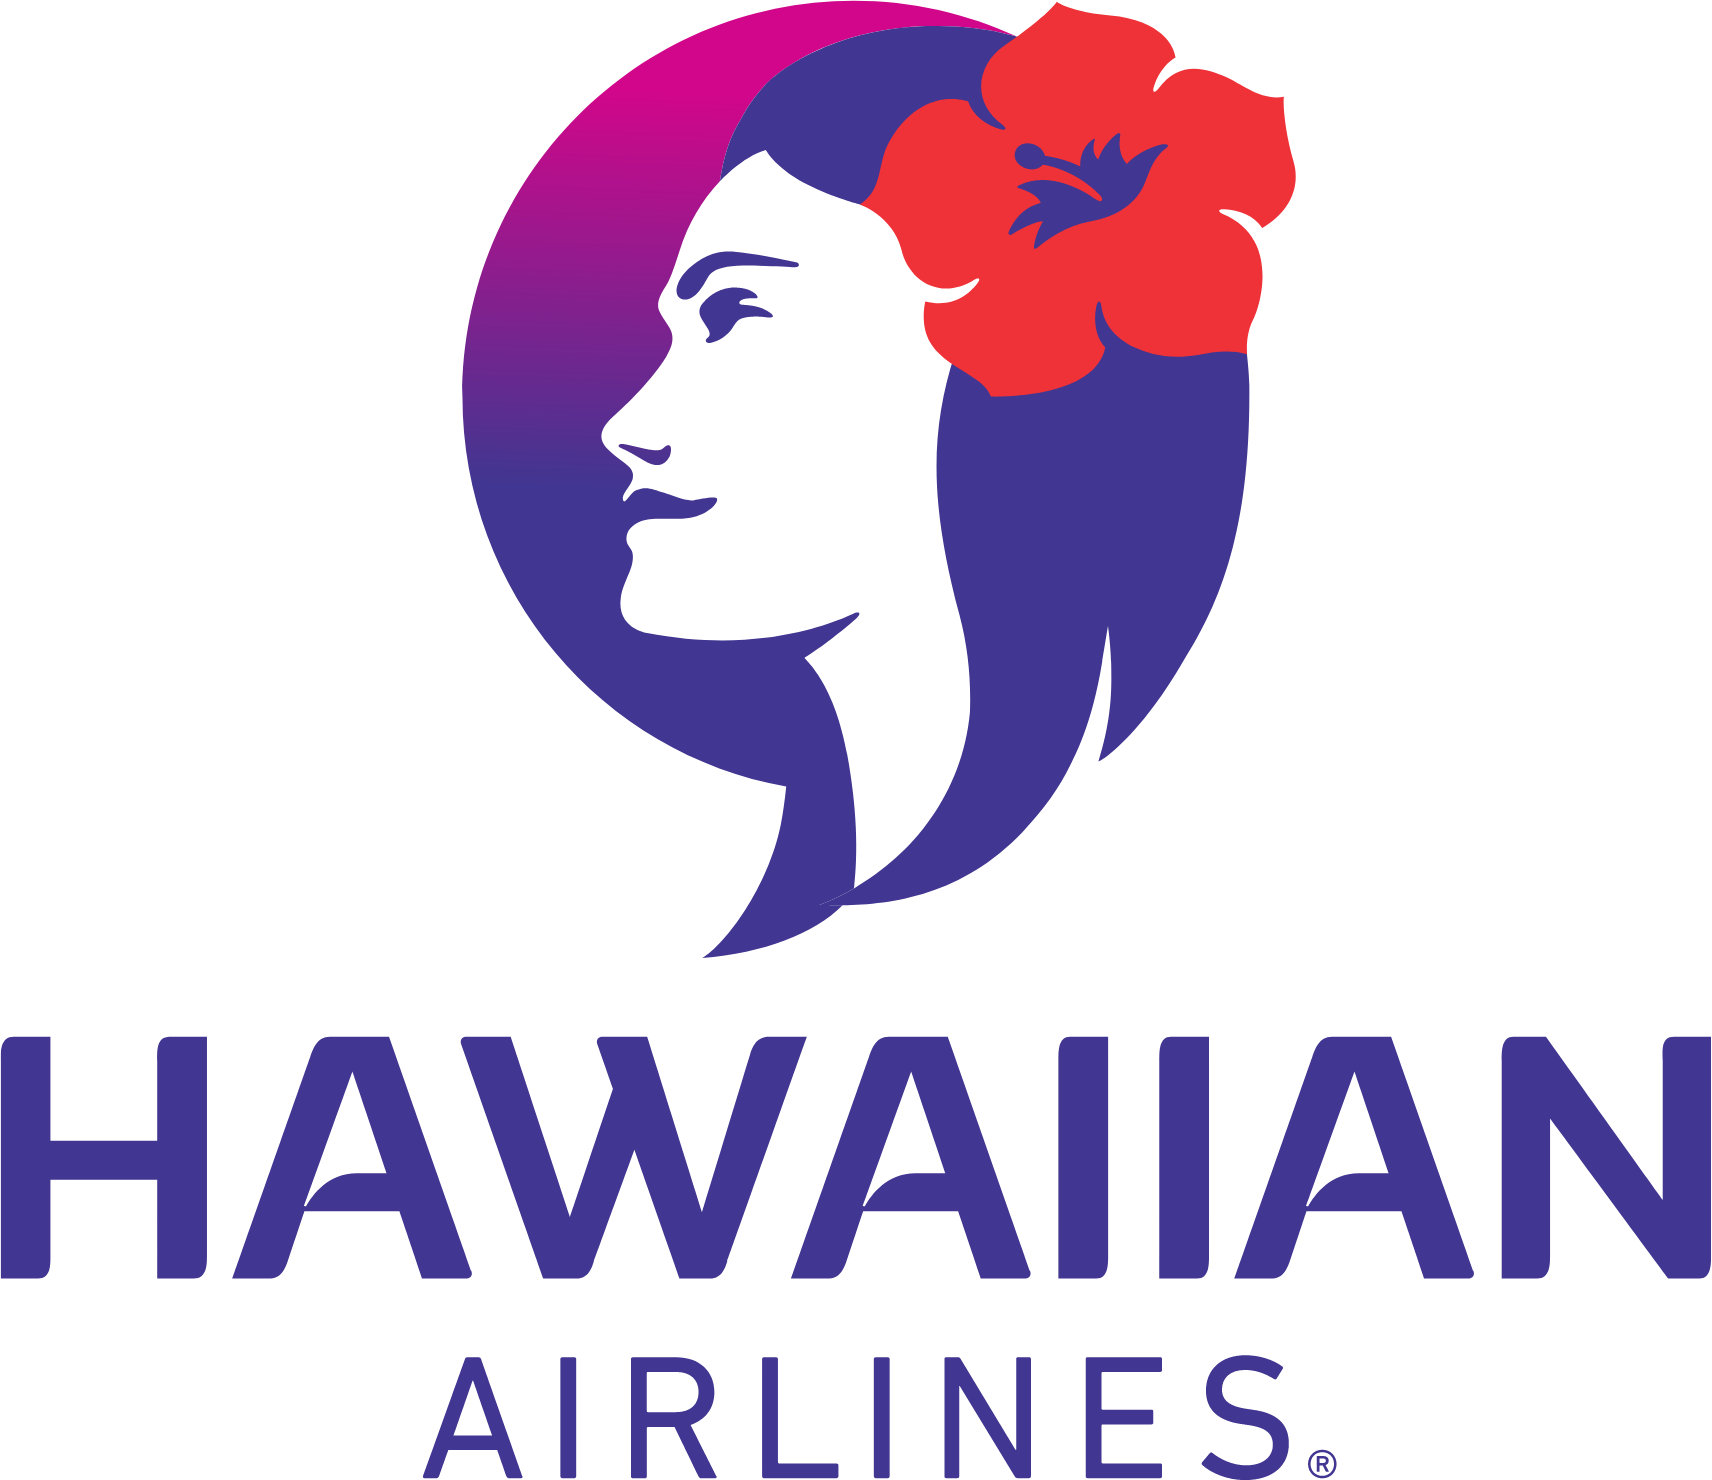 Hawaiian Airlines logo large (transparent PNG)